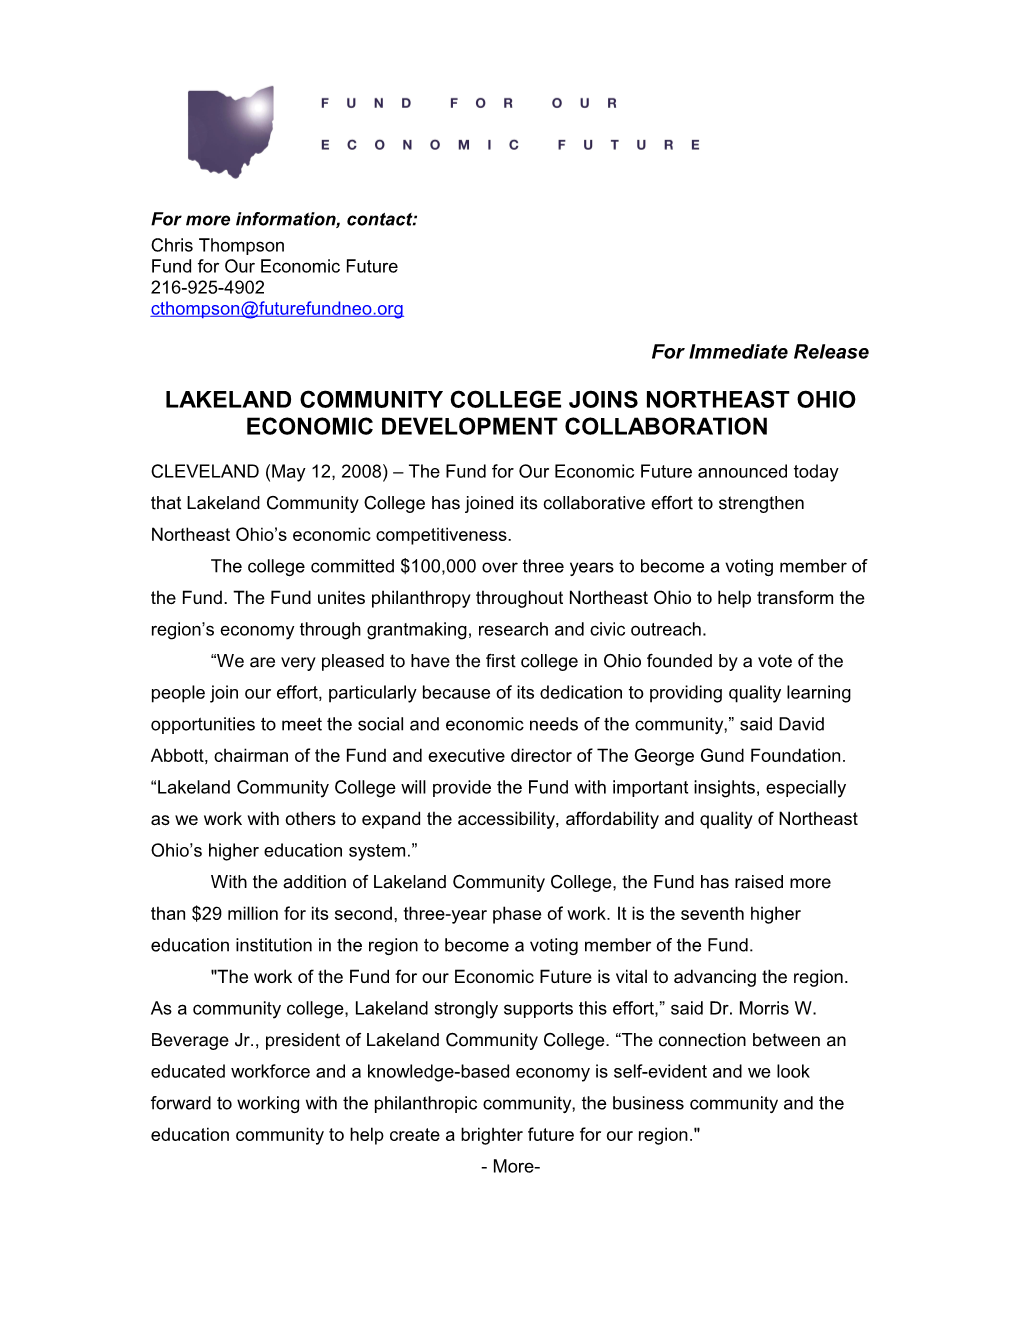 051208 Lakeland Community College Joins Northeast Ohio Economic Development Collaboration